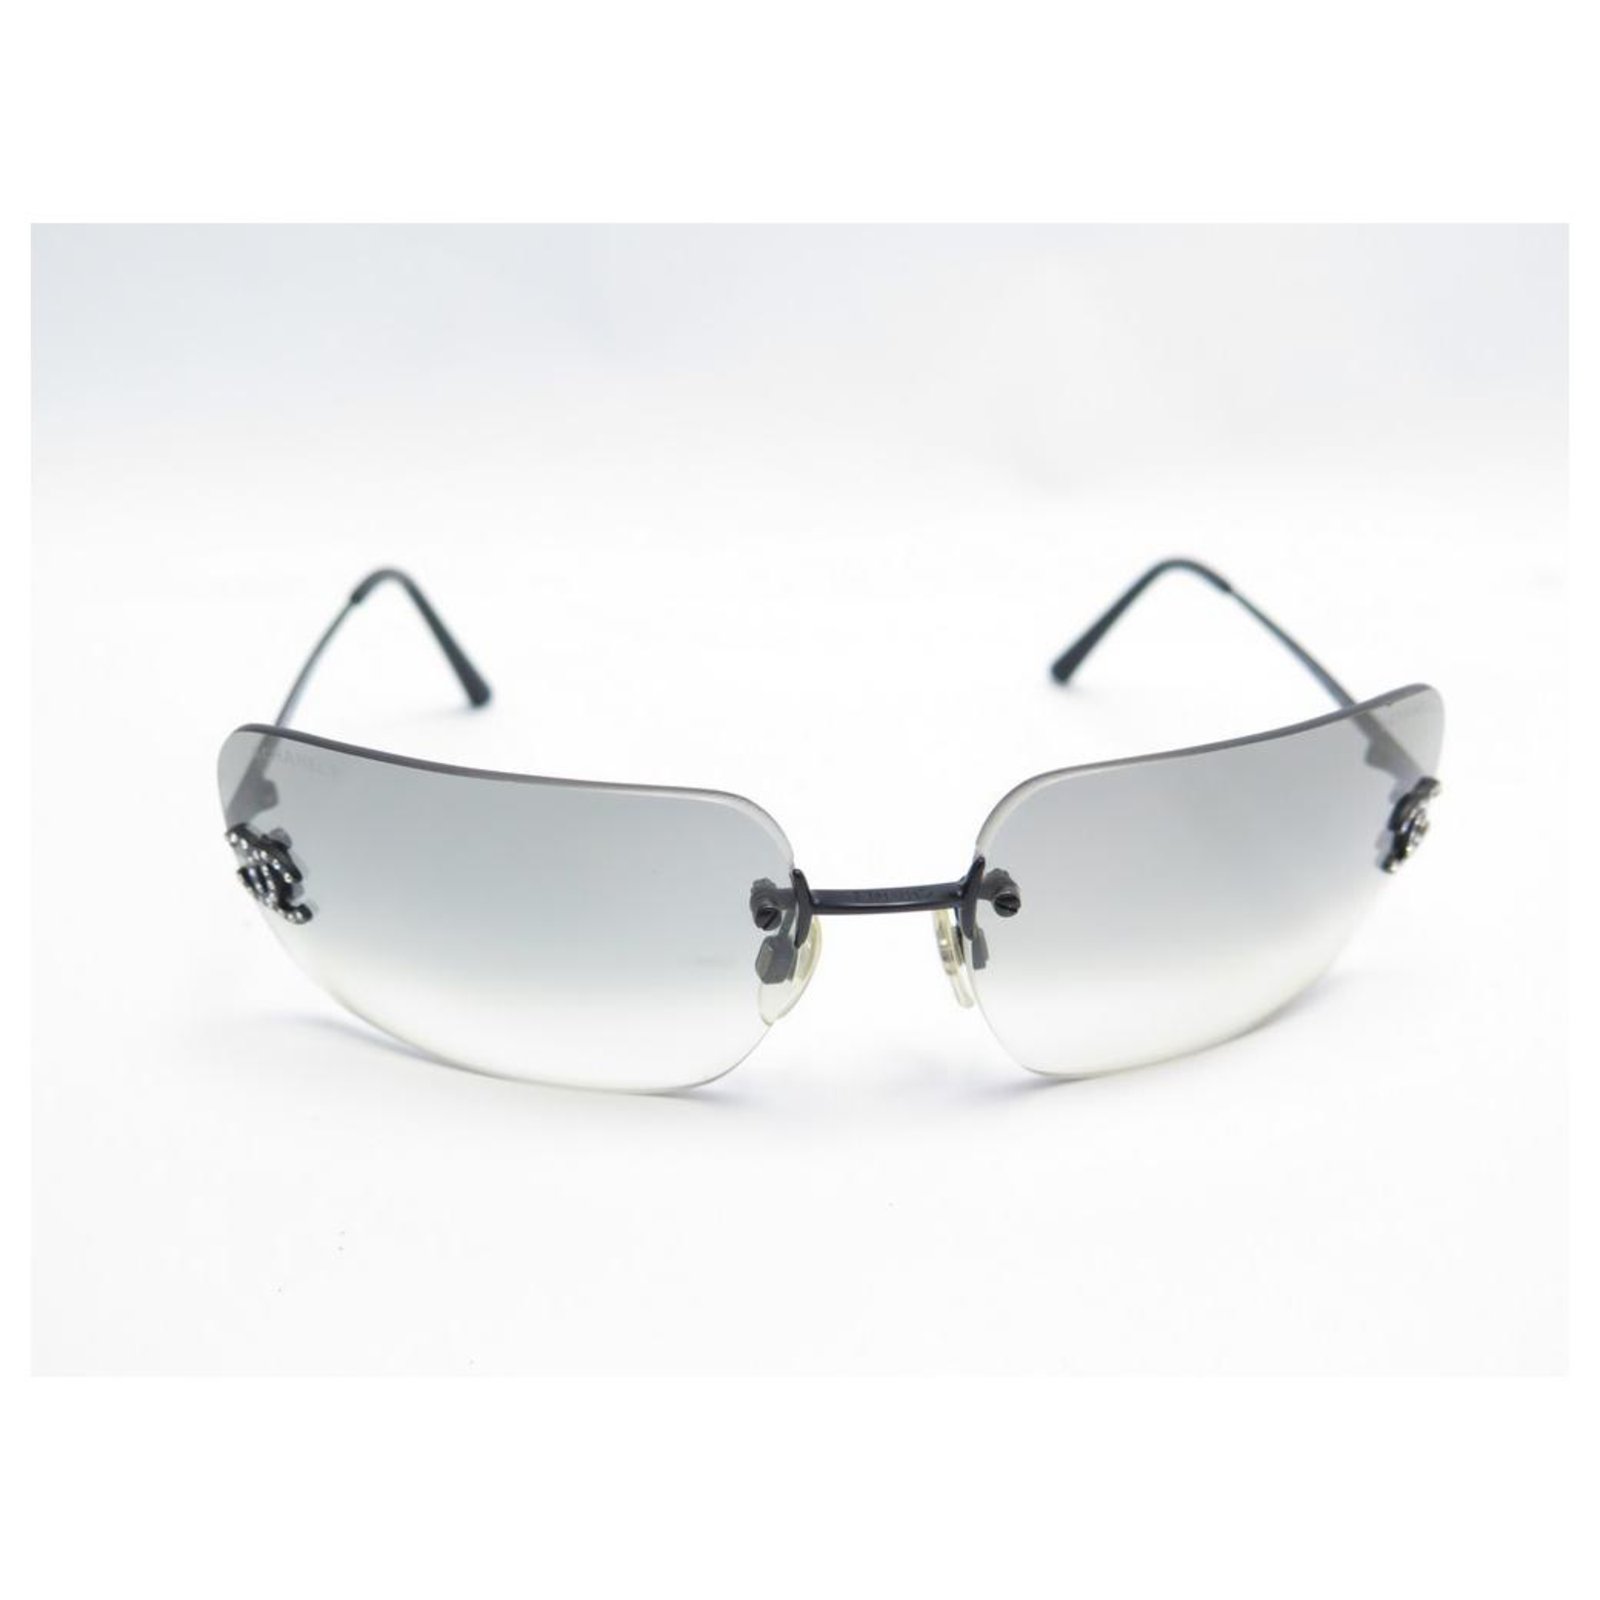 Chanel sunglasses 4017 LOGO CC STRASS BLACK METAL SUNGLASSES BOX ref ...